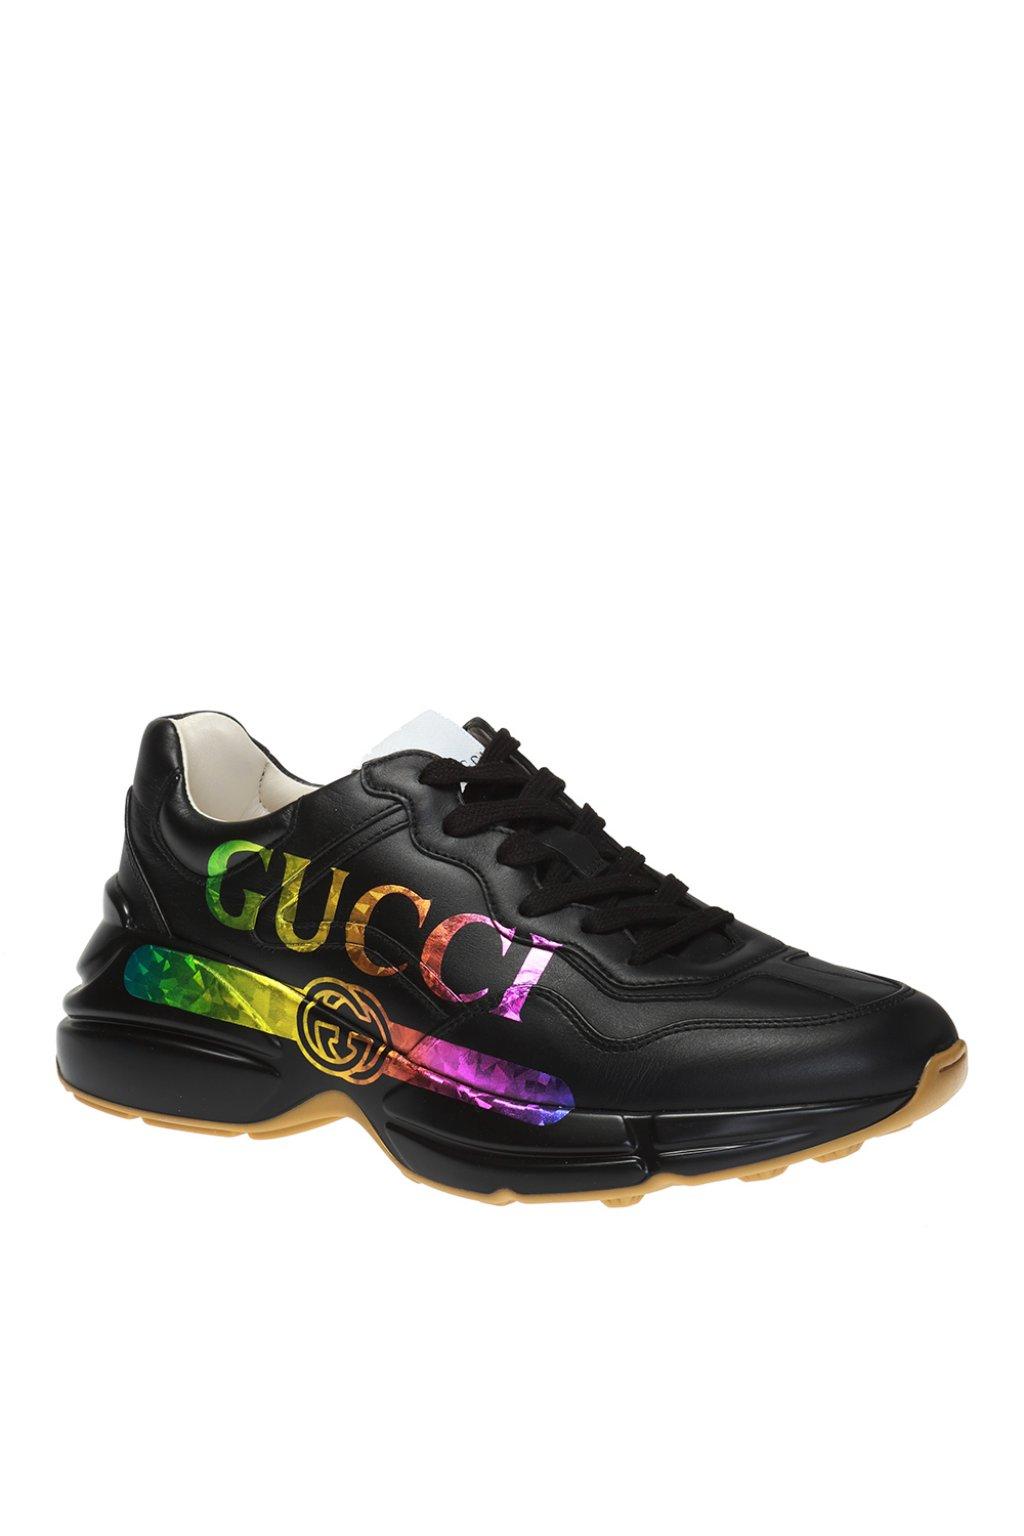 gucci rhyton sneaker price